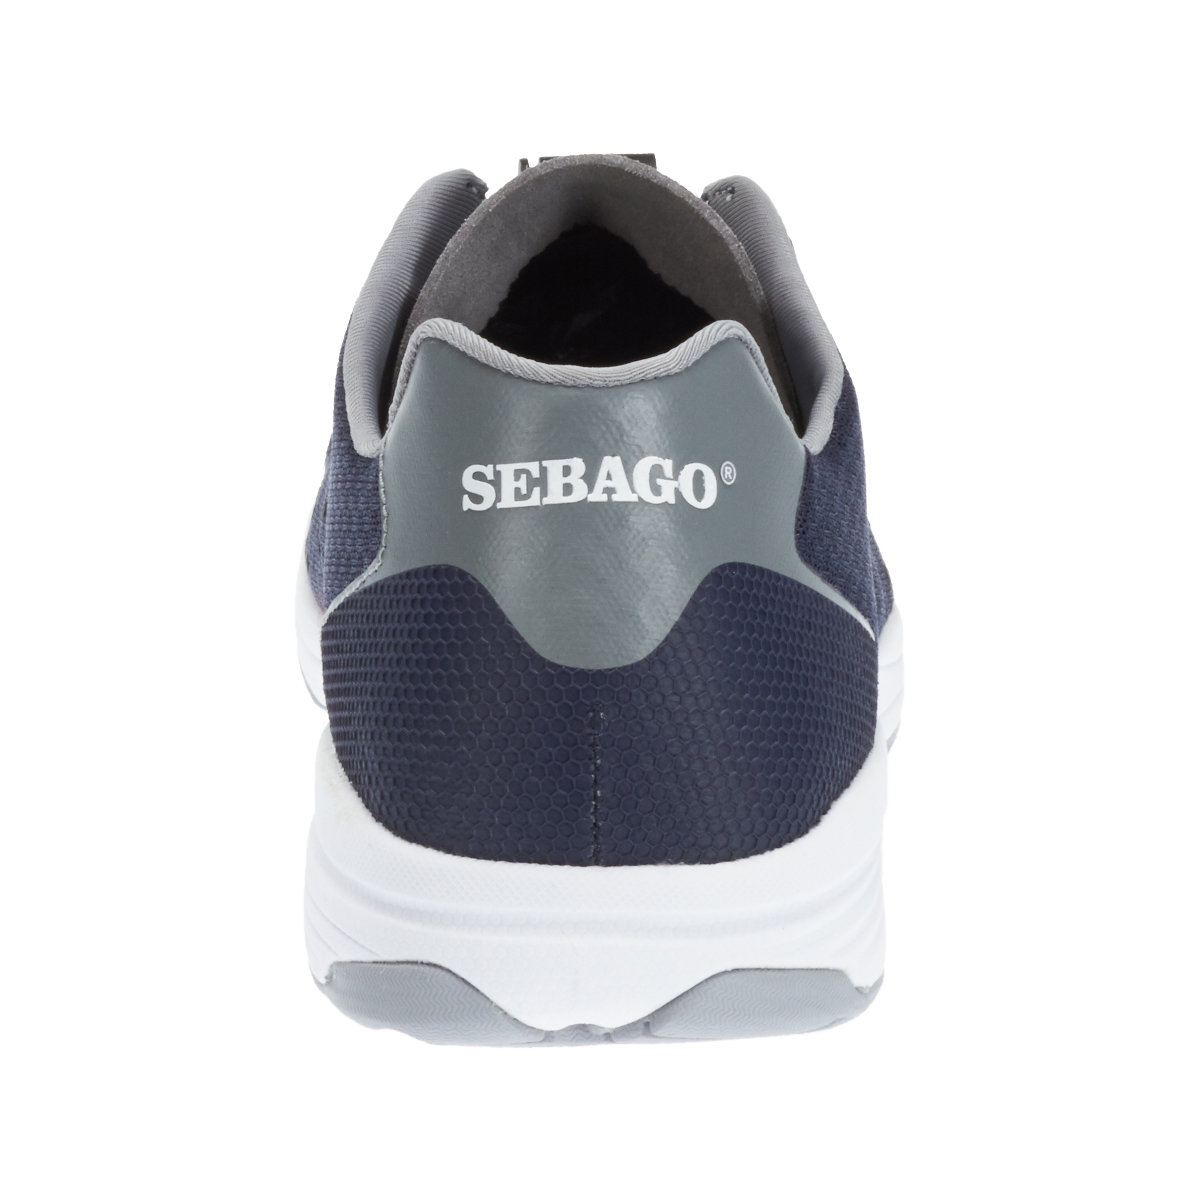 Sebago Cyphon Sea Sport chaussures à voile homme navy, taille EU 47 (US 12,5)